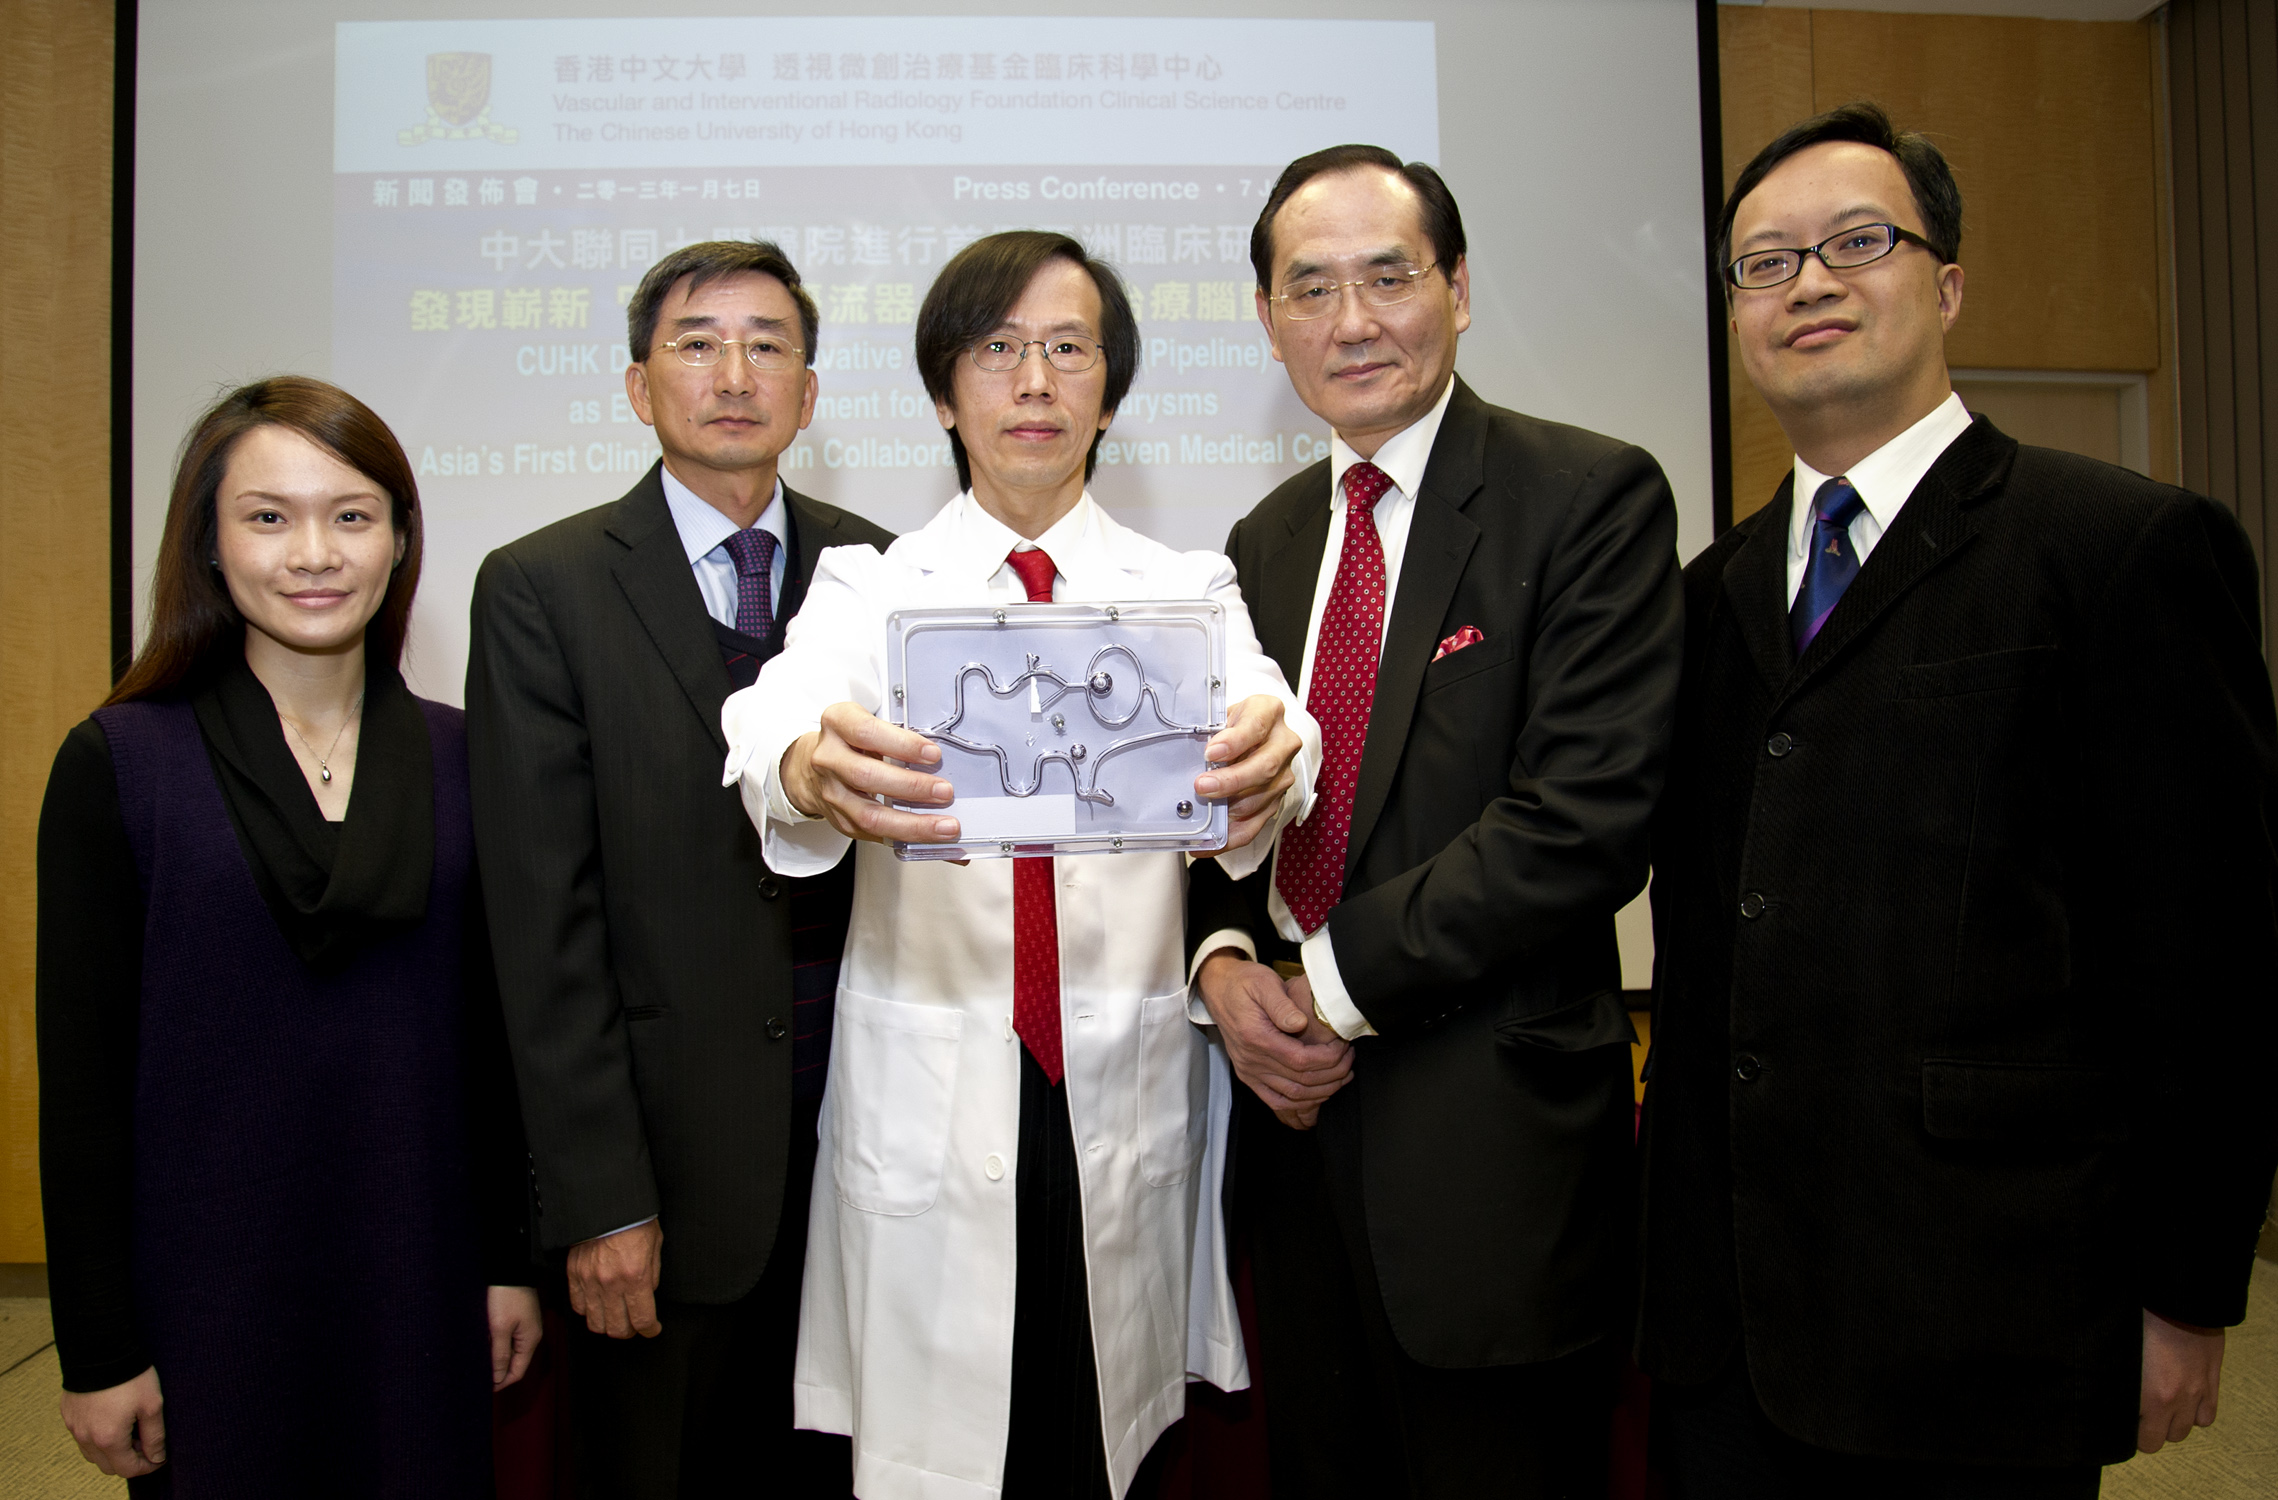 Professor Simon Chun Ho YU and representatives from other medical centres